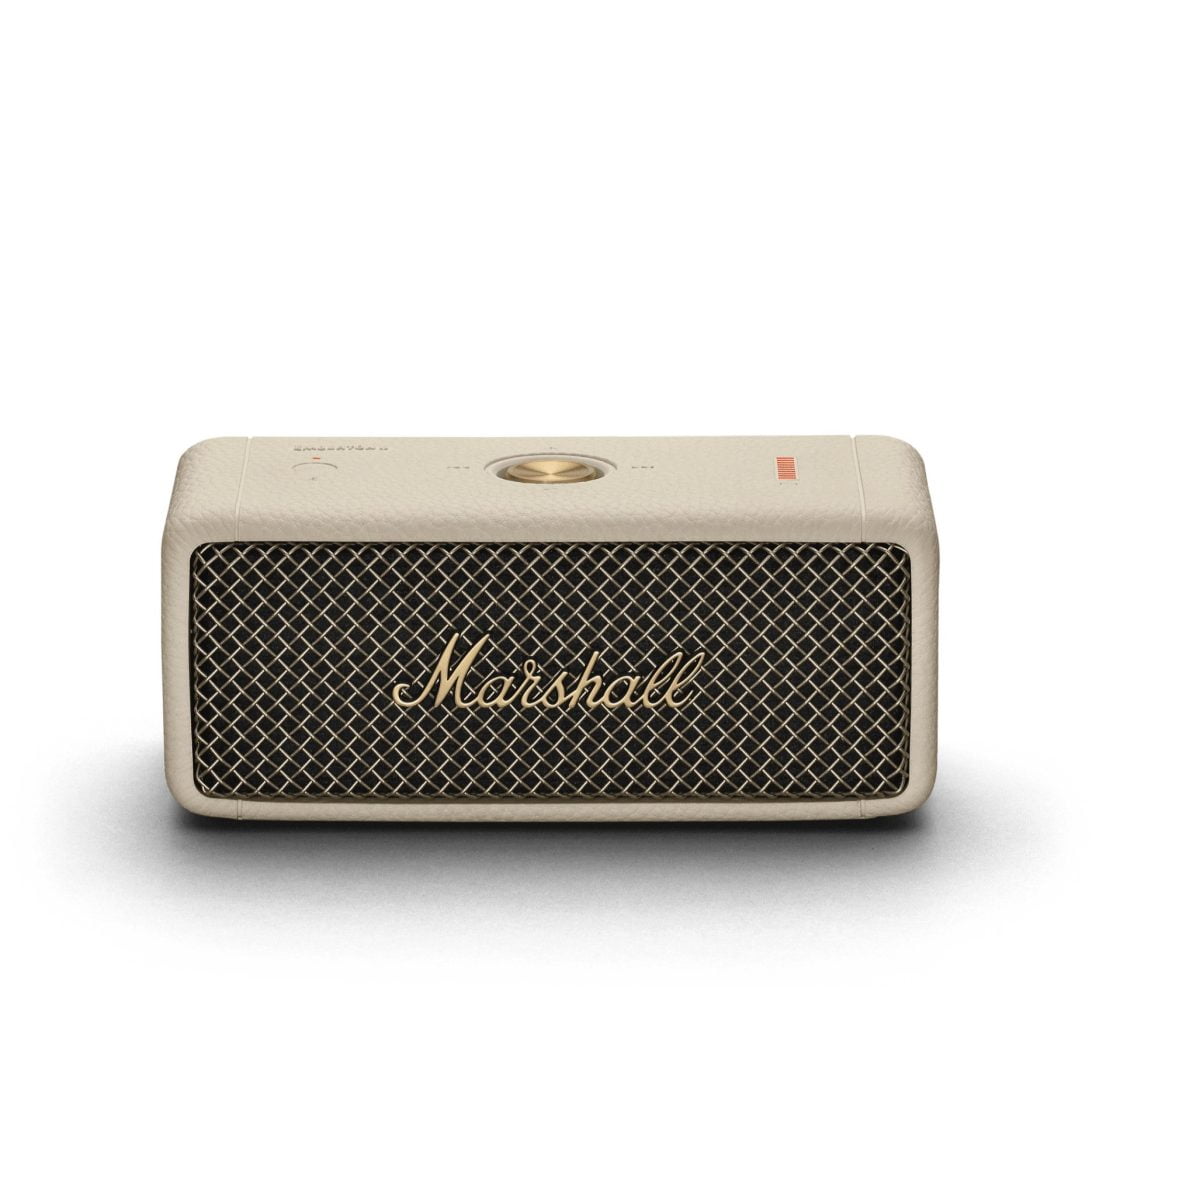 Marshall Emberton 2 Bluetooth Speaker - Cream